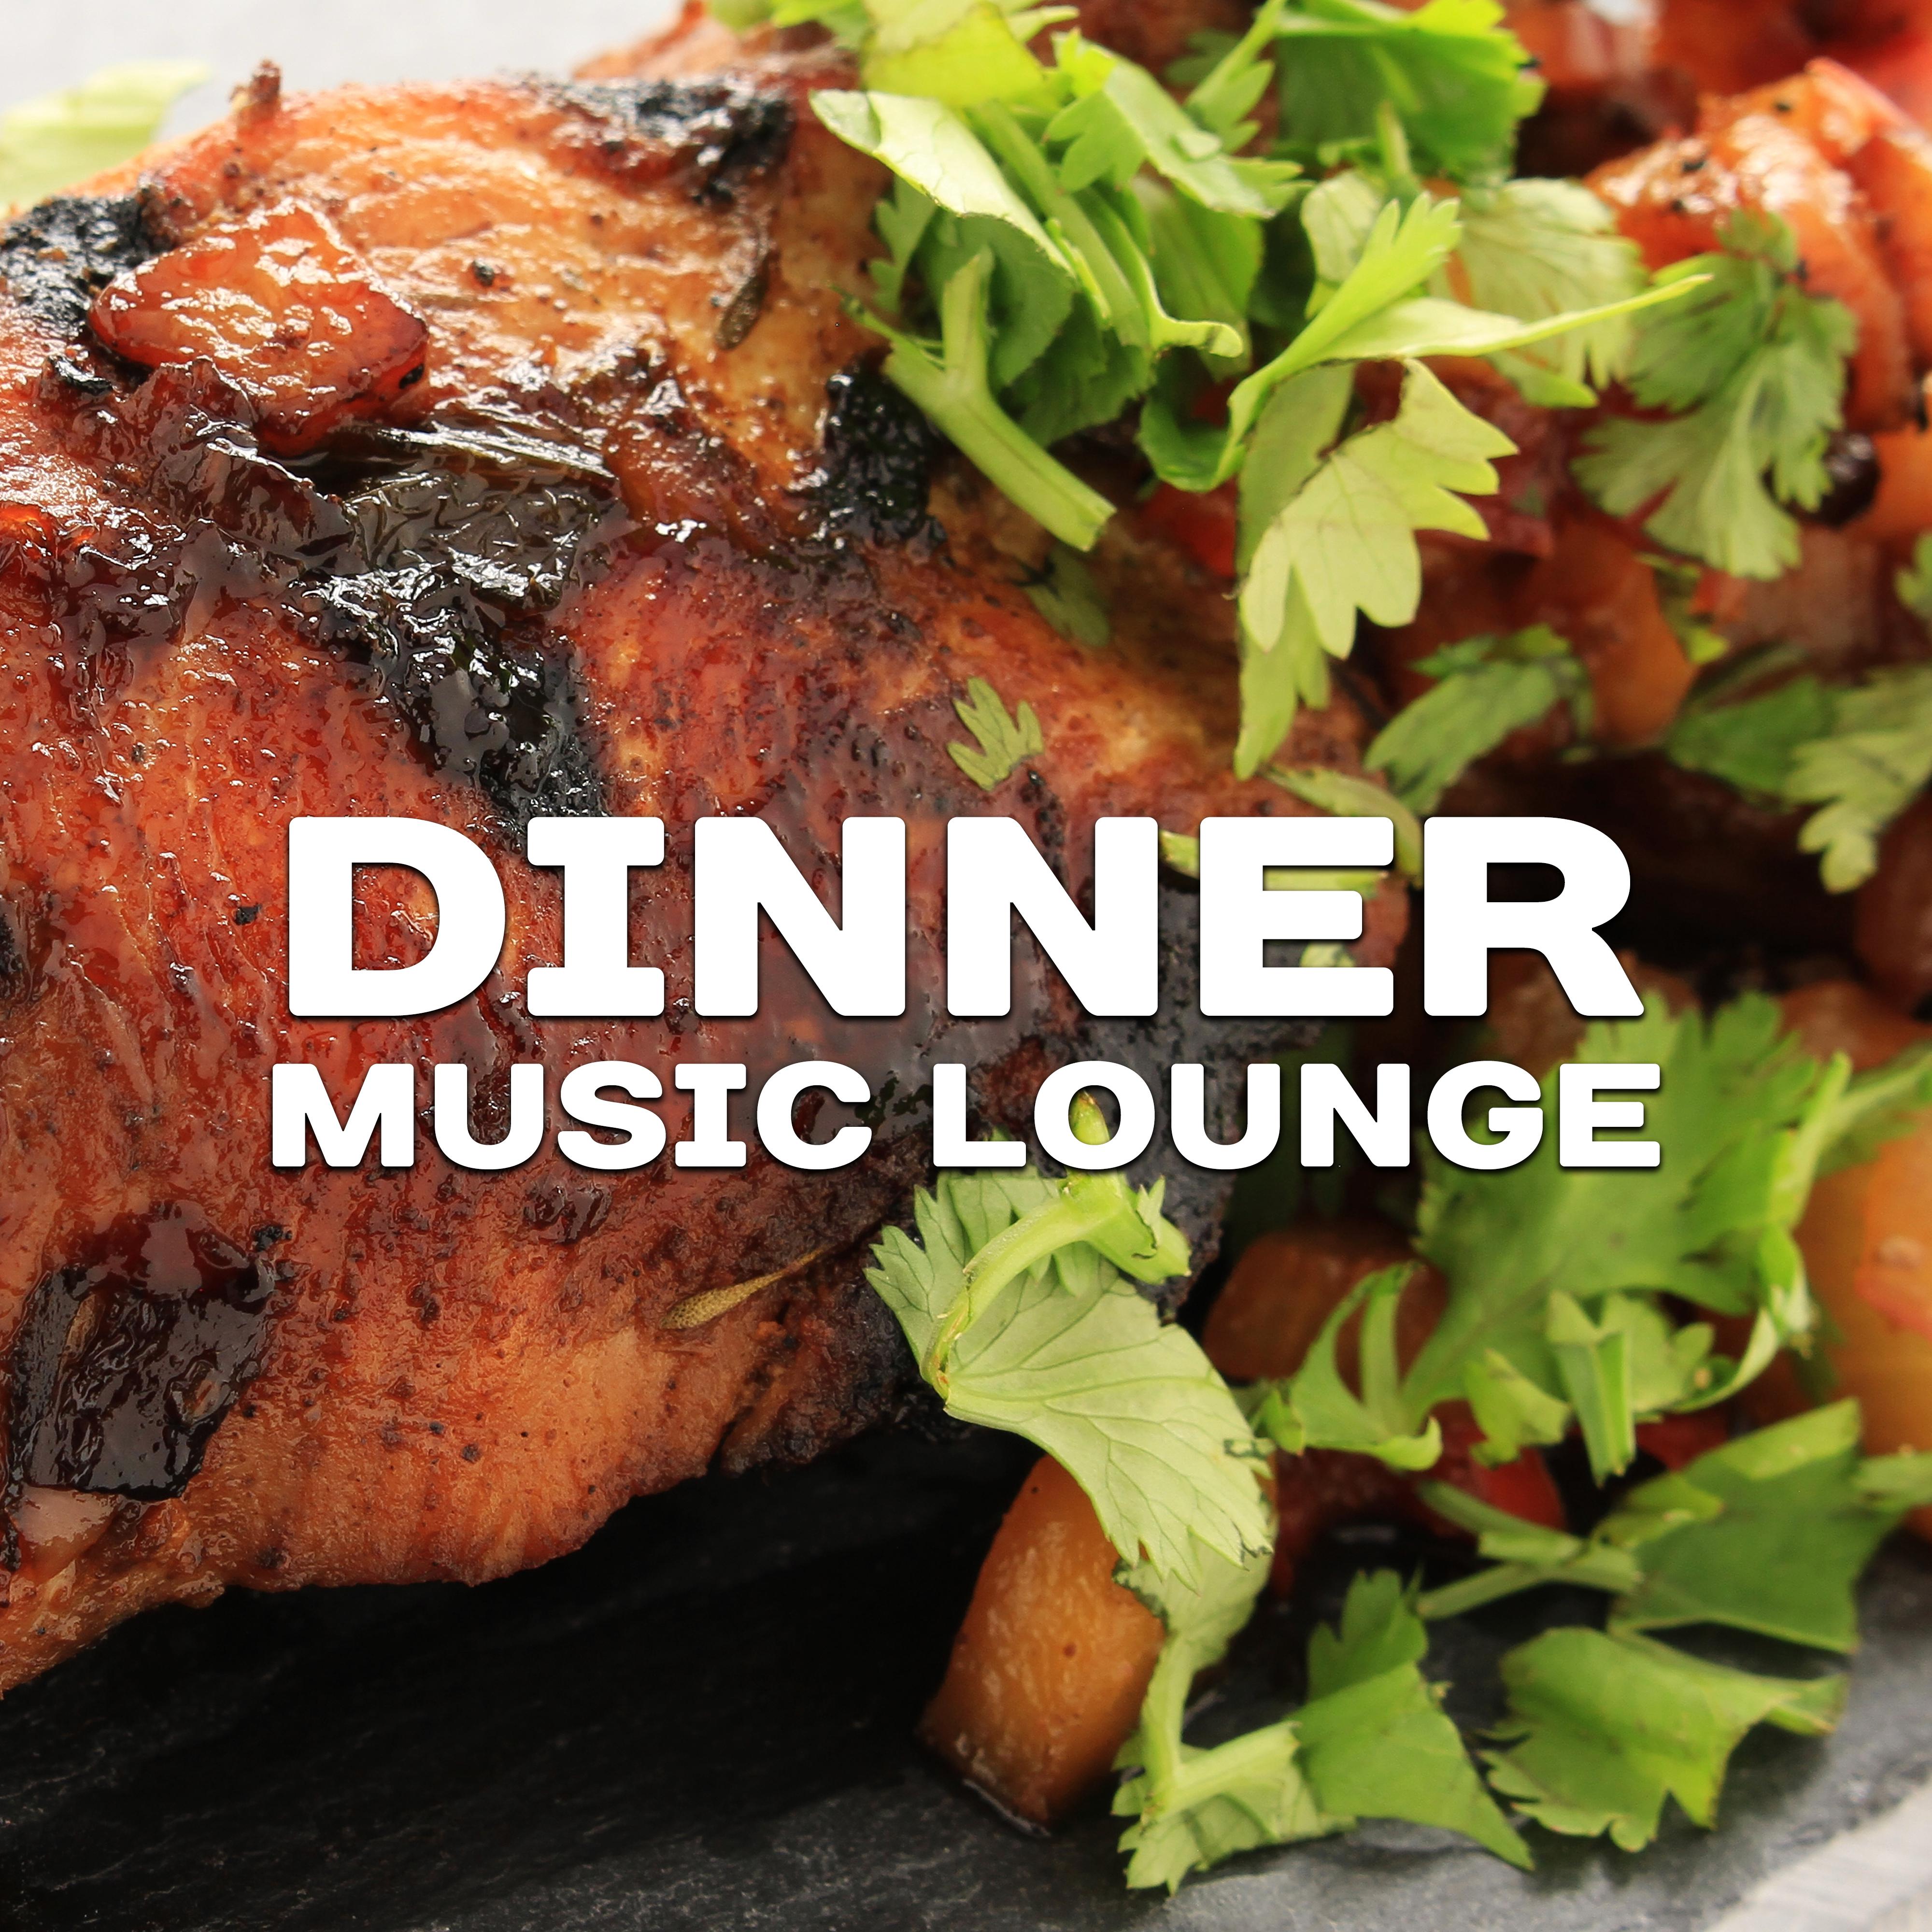 Dinner Music Lounge  Jazz Music for Restaurant  Cafe, Lounge, Ambient Jazz Instrumental